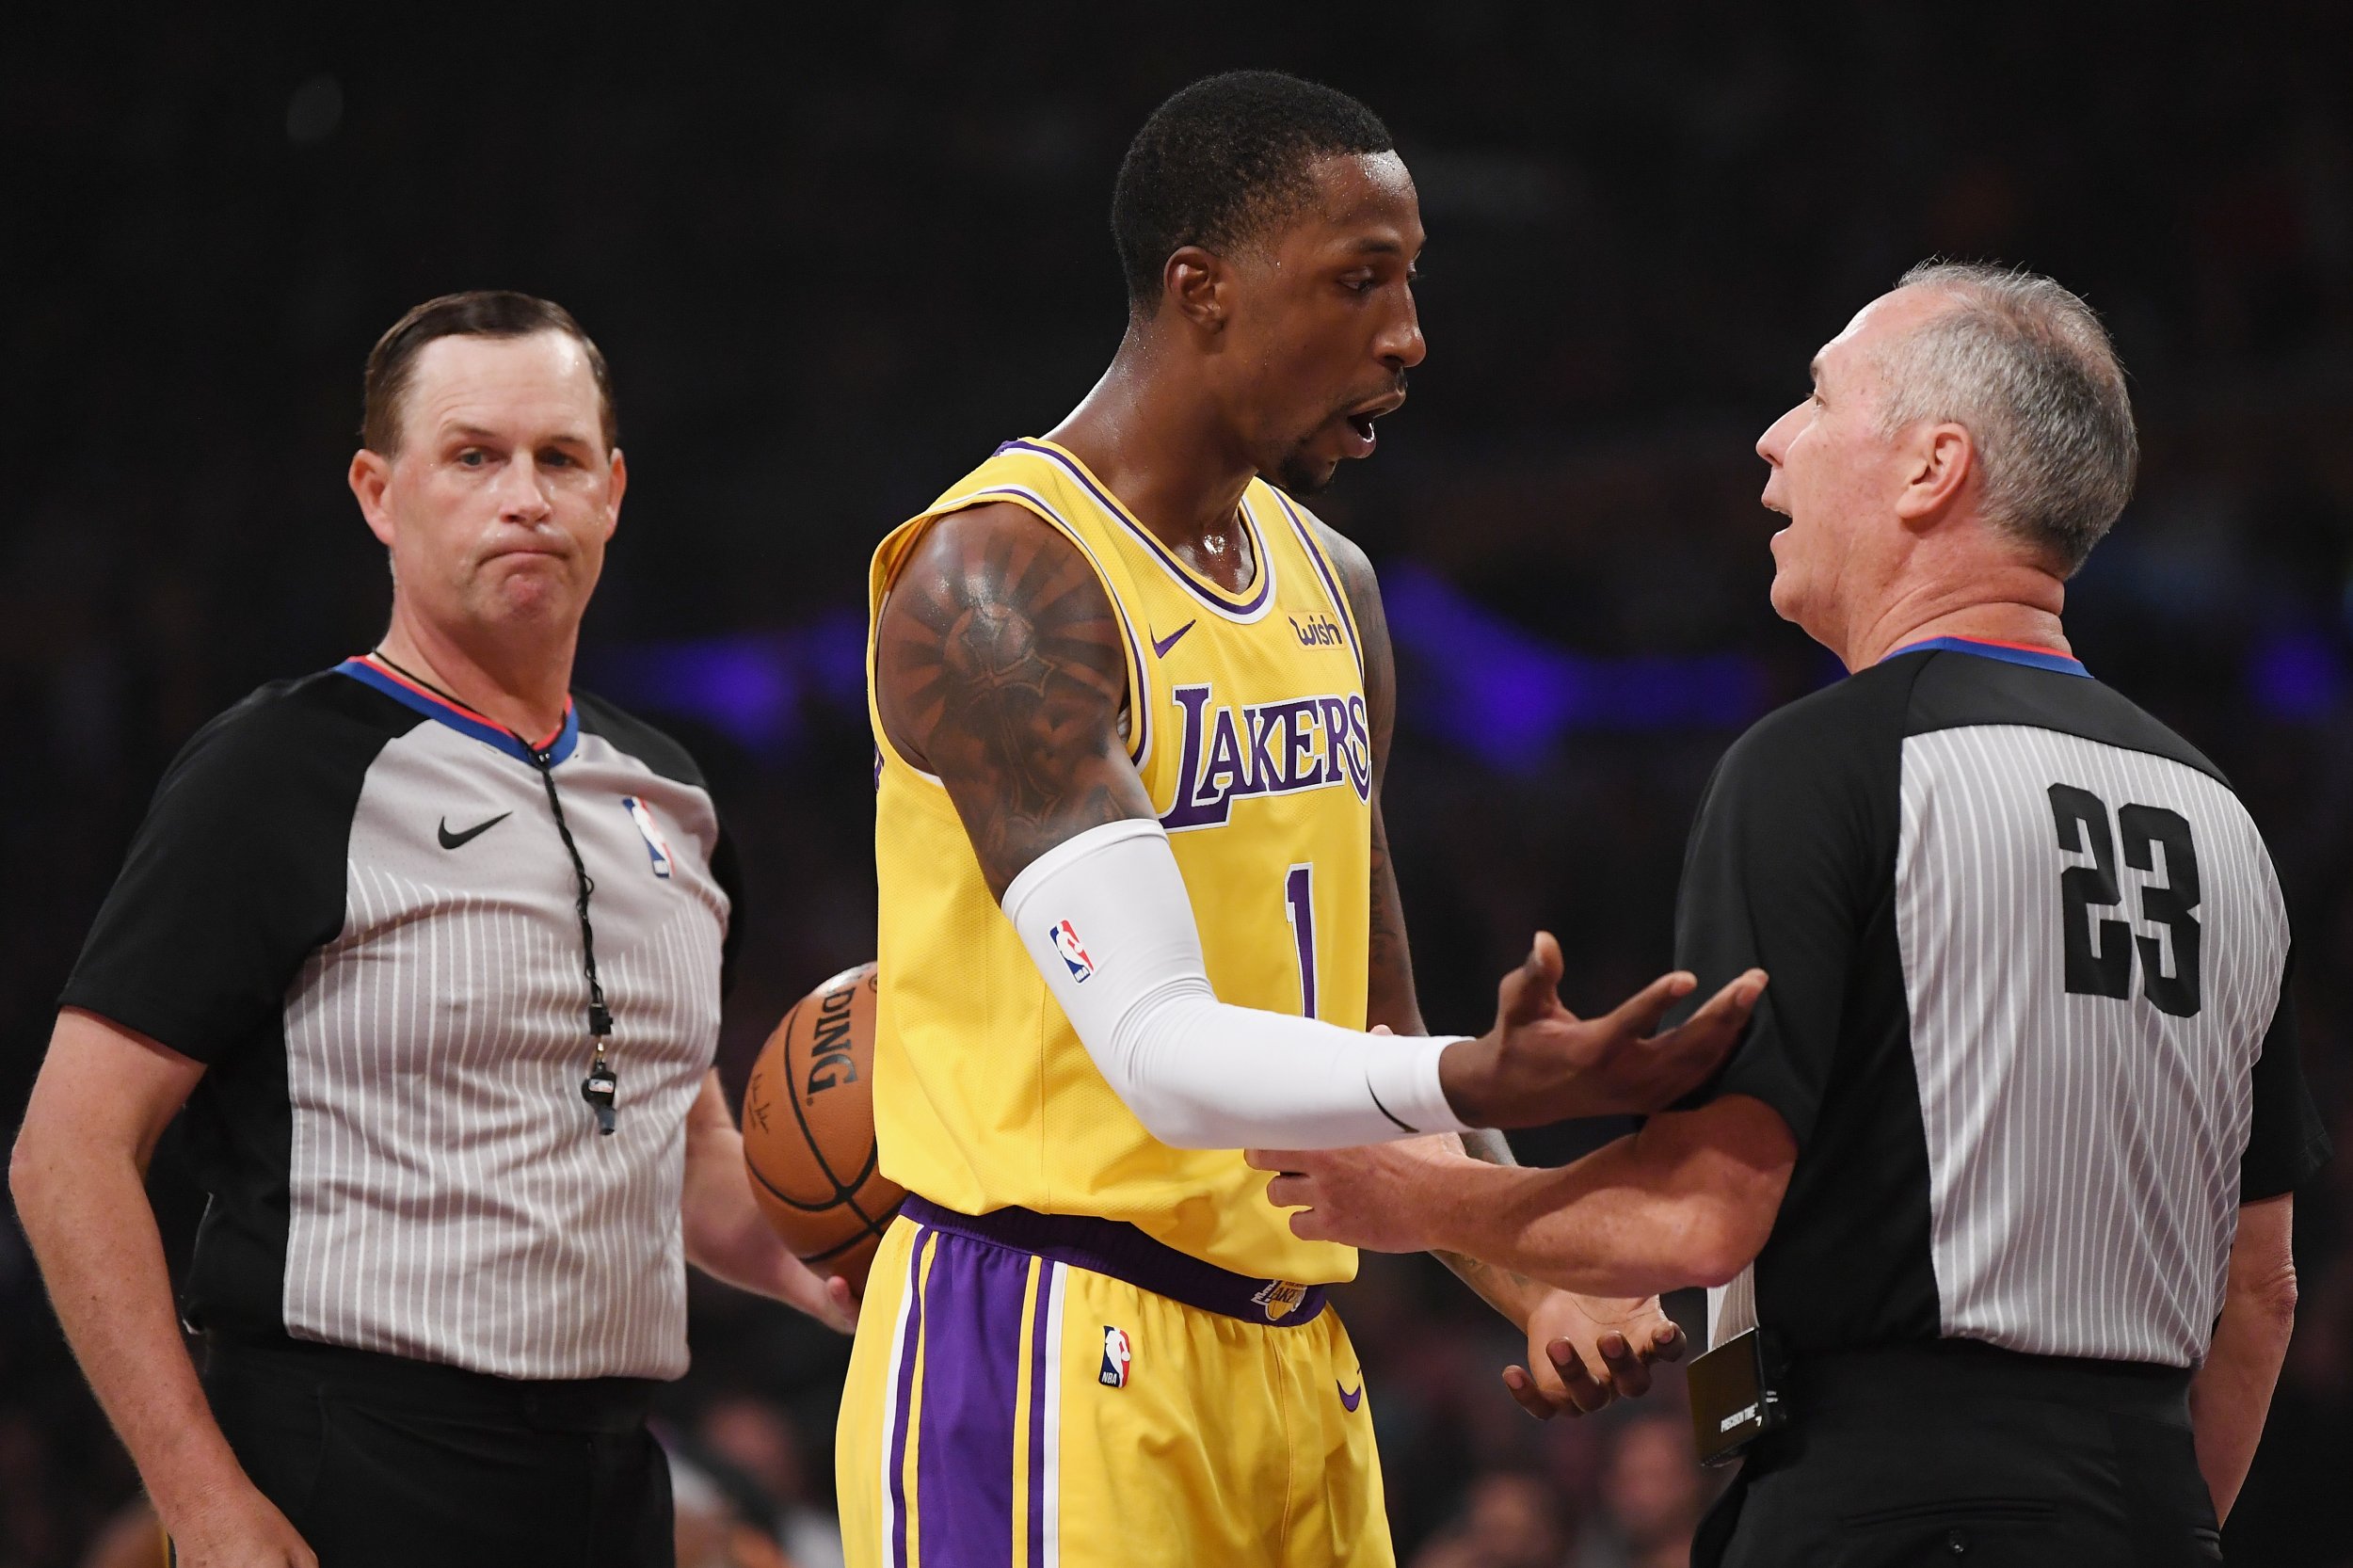 NBA refs take to social media to explain controversial calls in